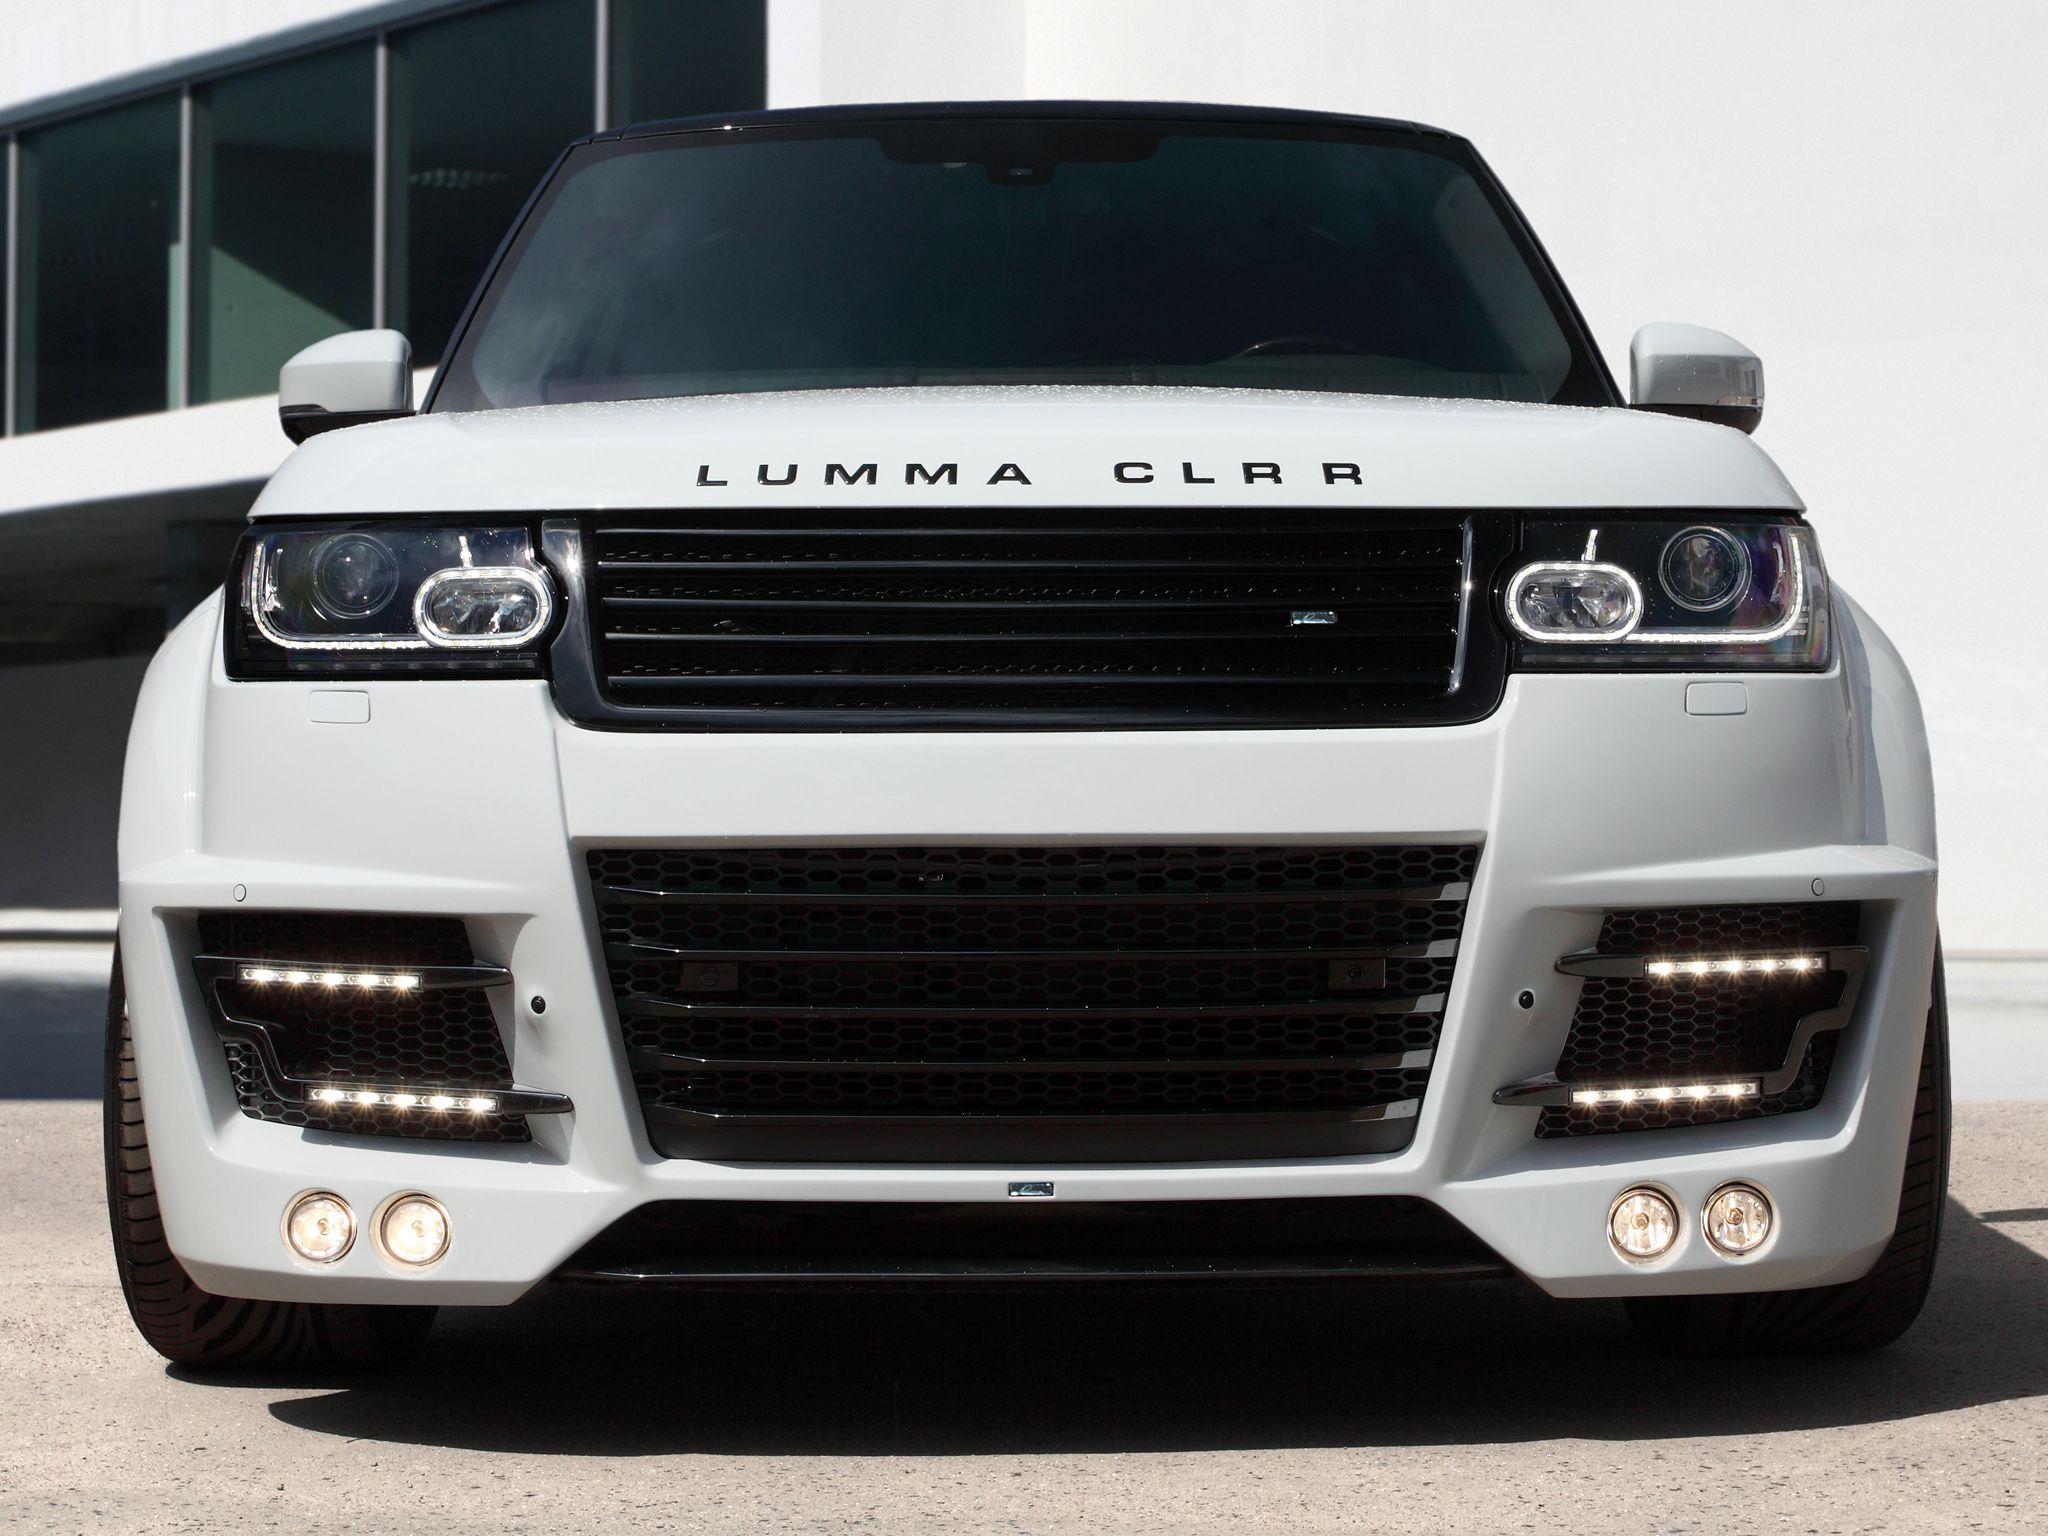 LUMMA CLR R Range Rover Supercharged tuning suv d wallpaper